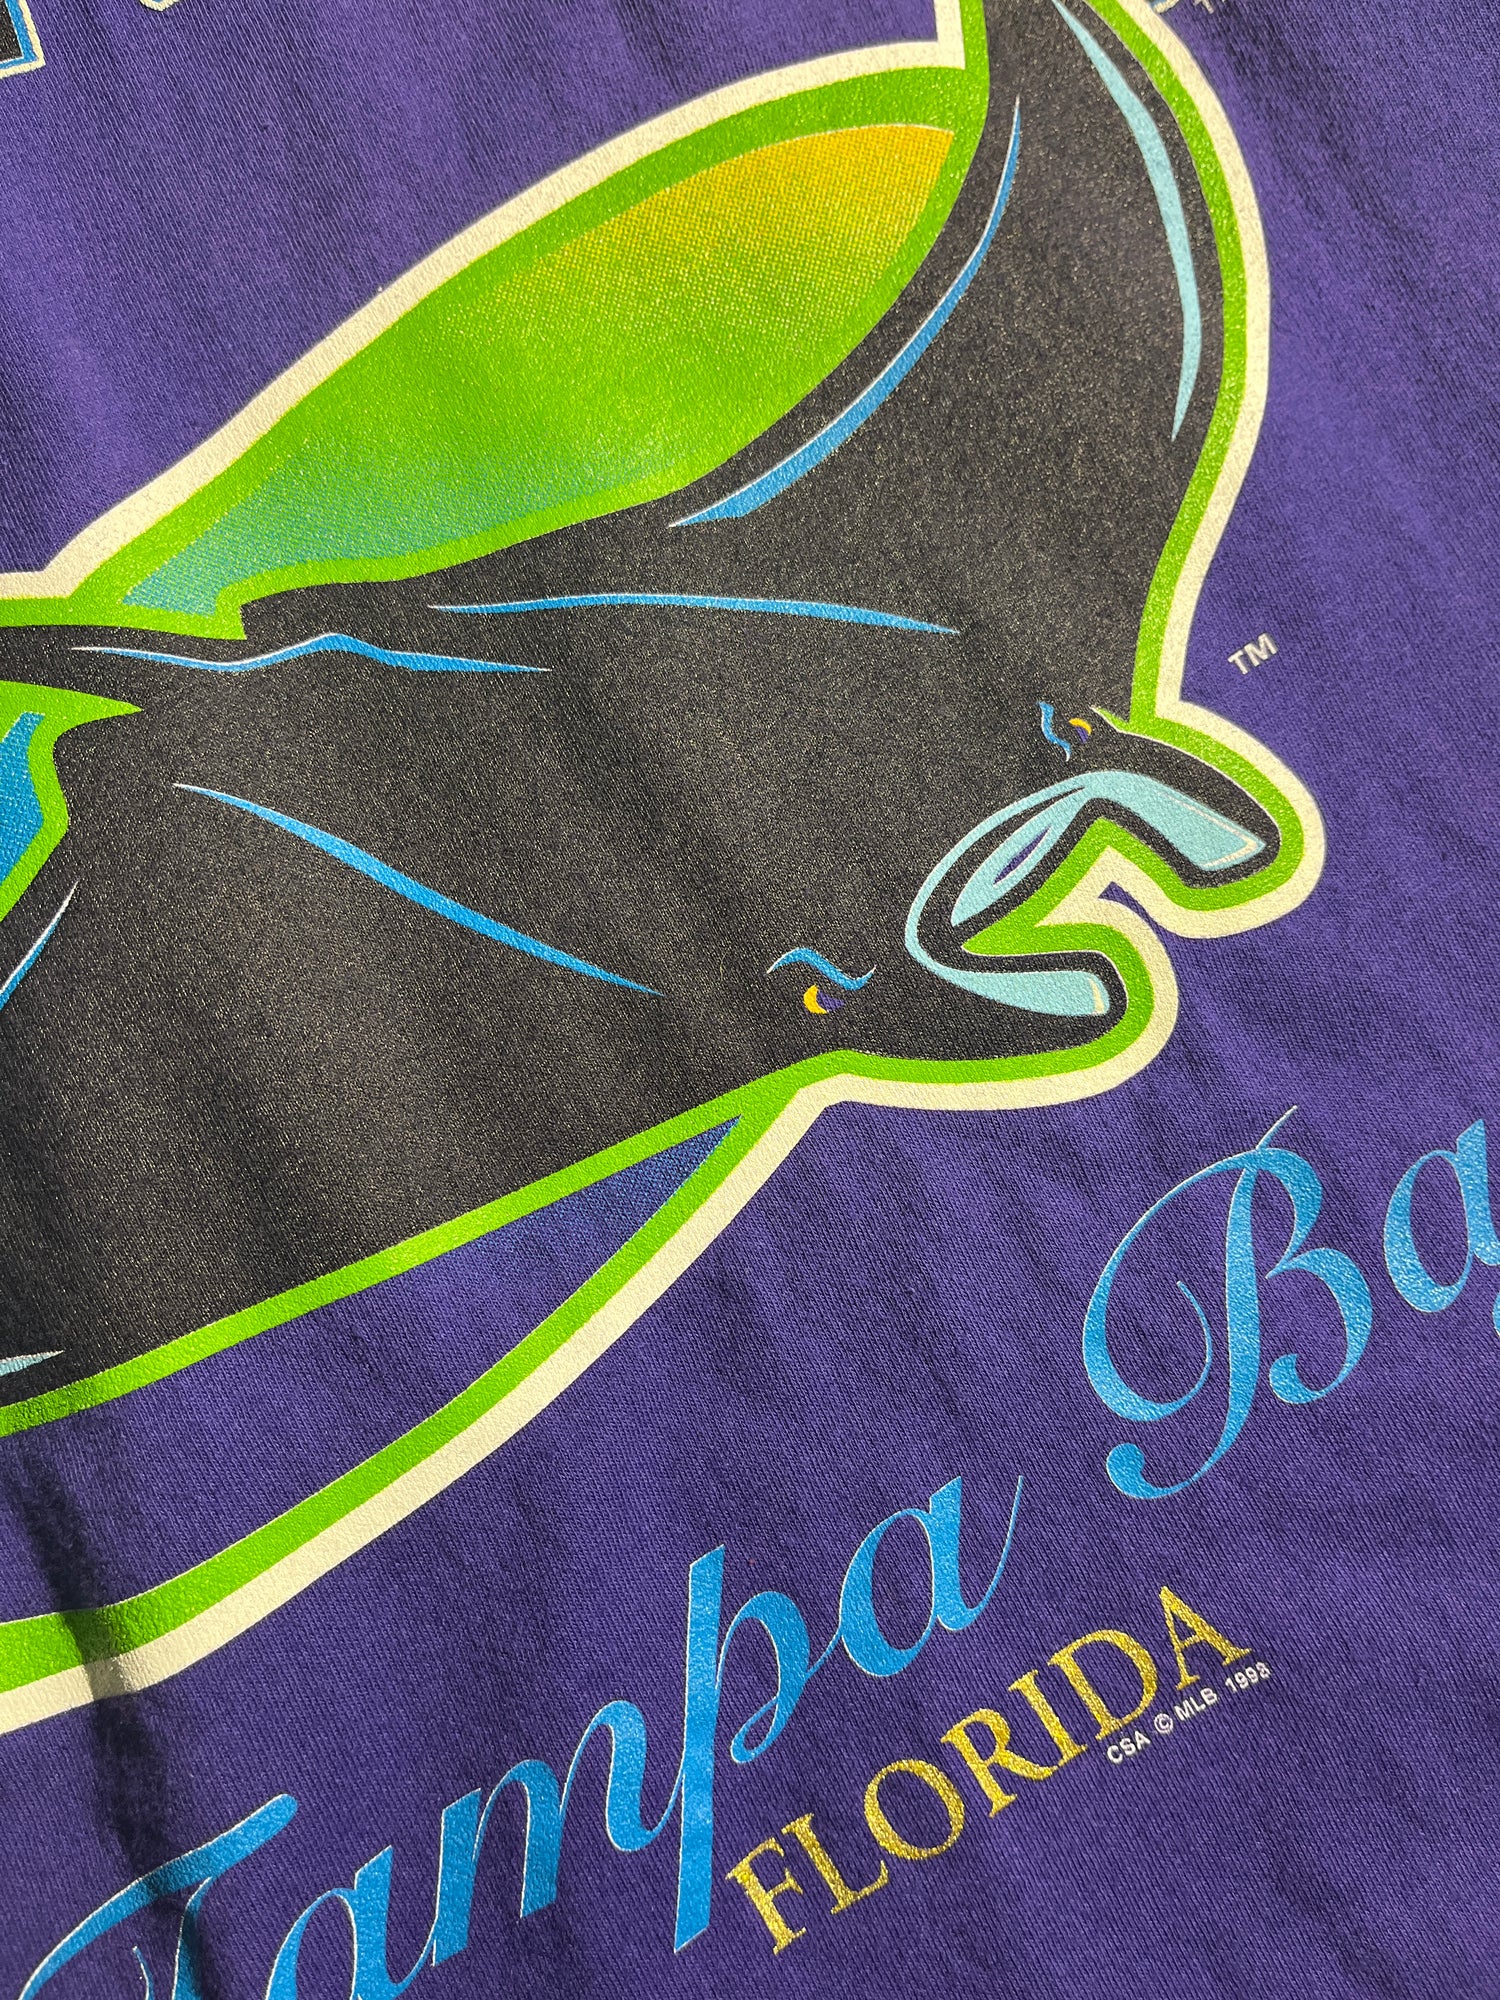 Tampa Bay Devil Rays Shirt Vintage 90s - Tarks Tees